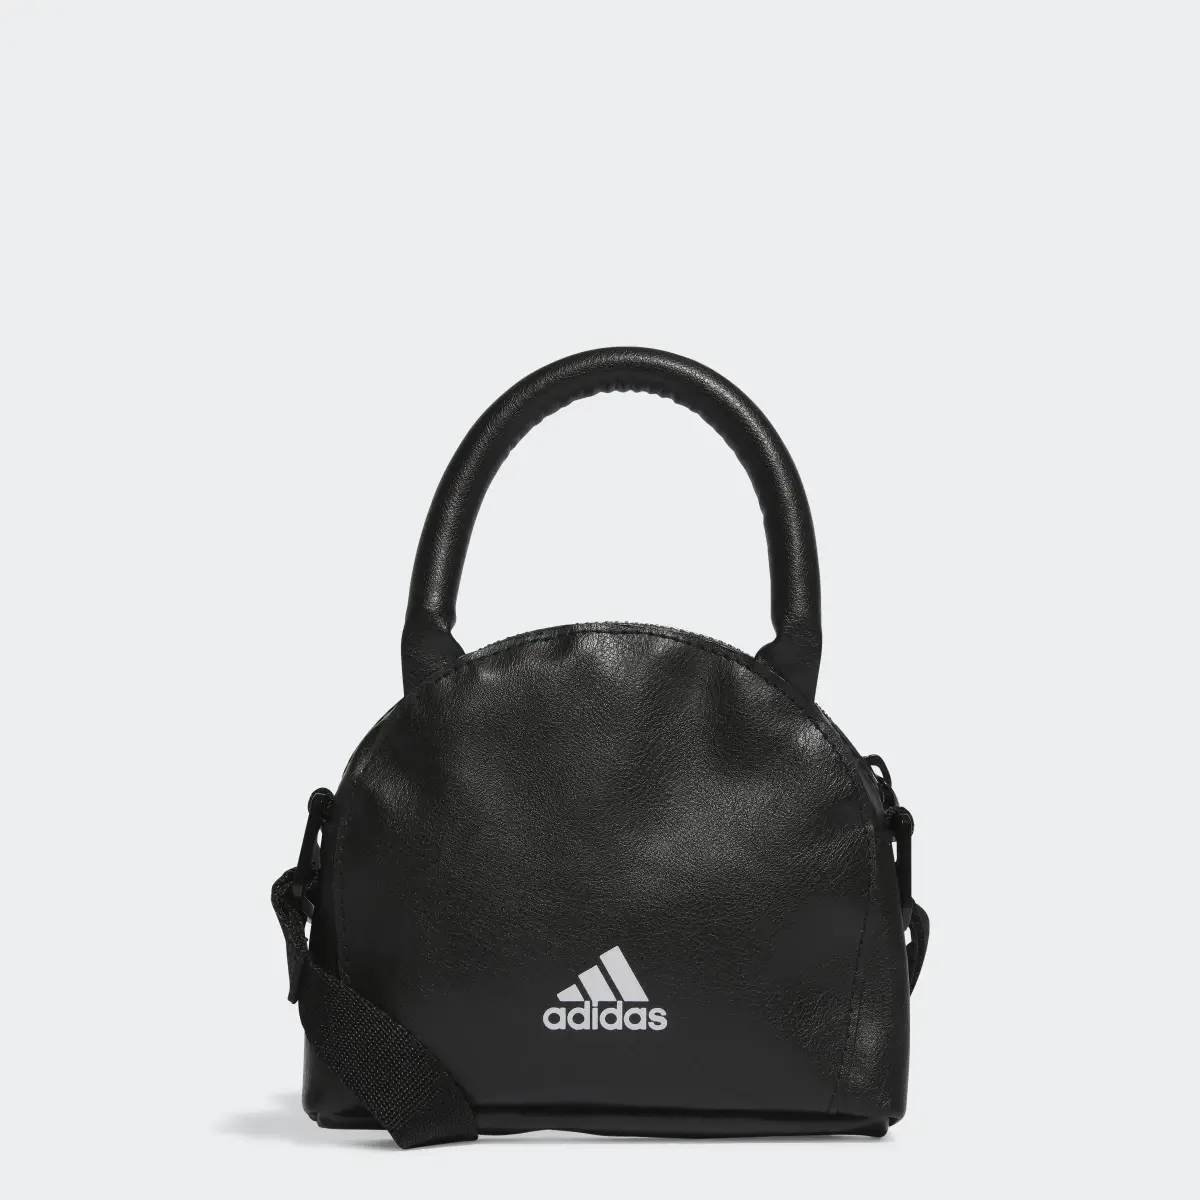 Adidas Back to School Small Bag. 1